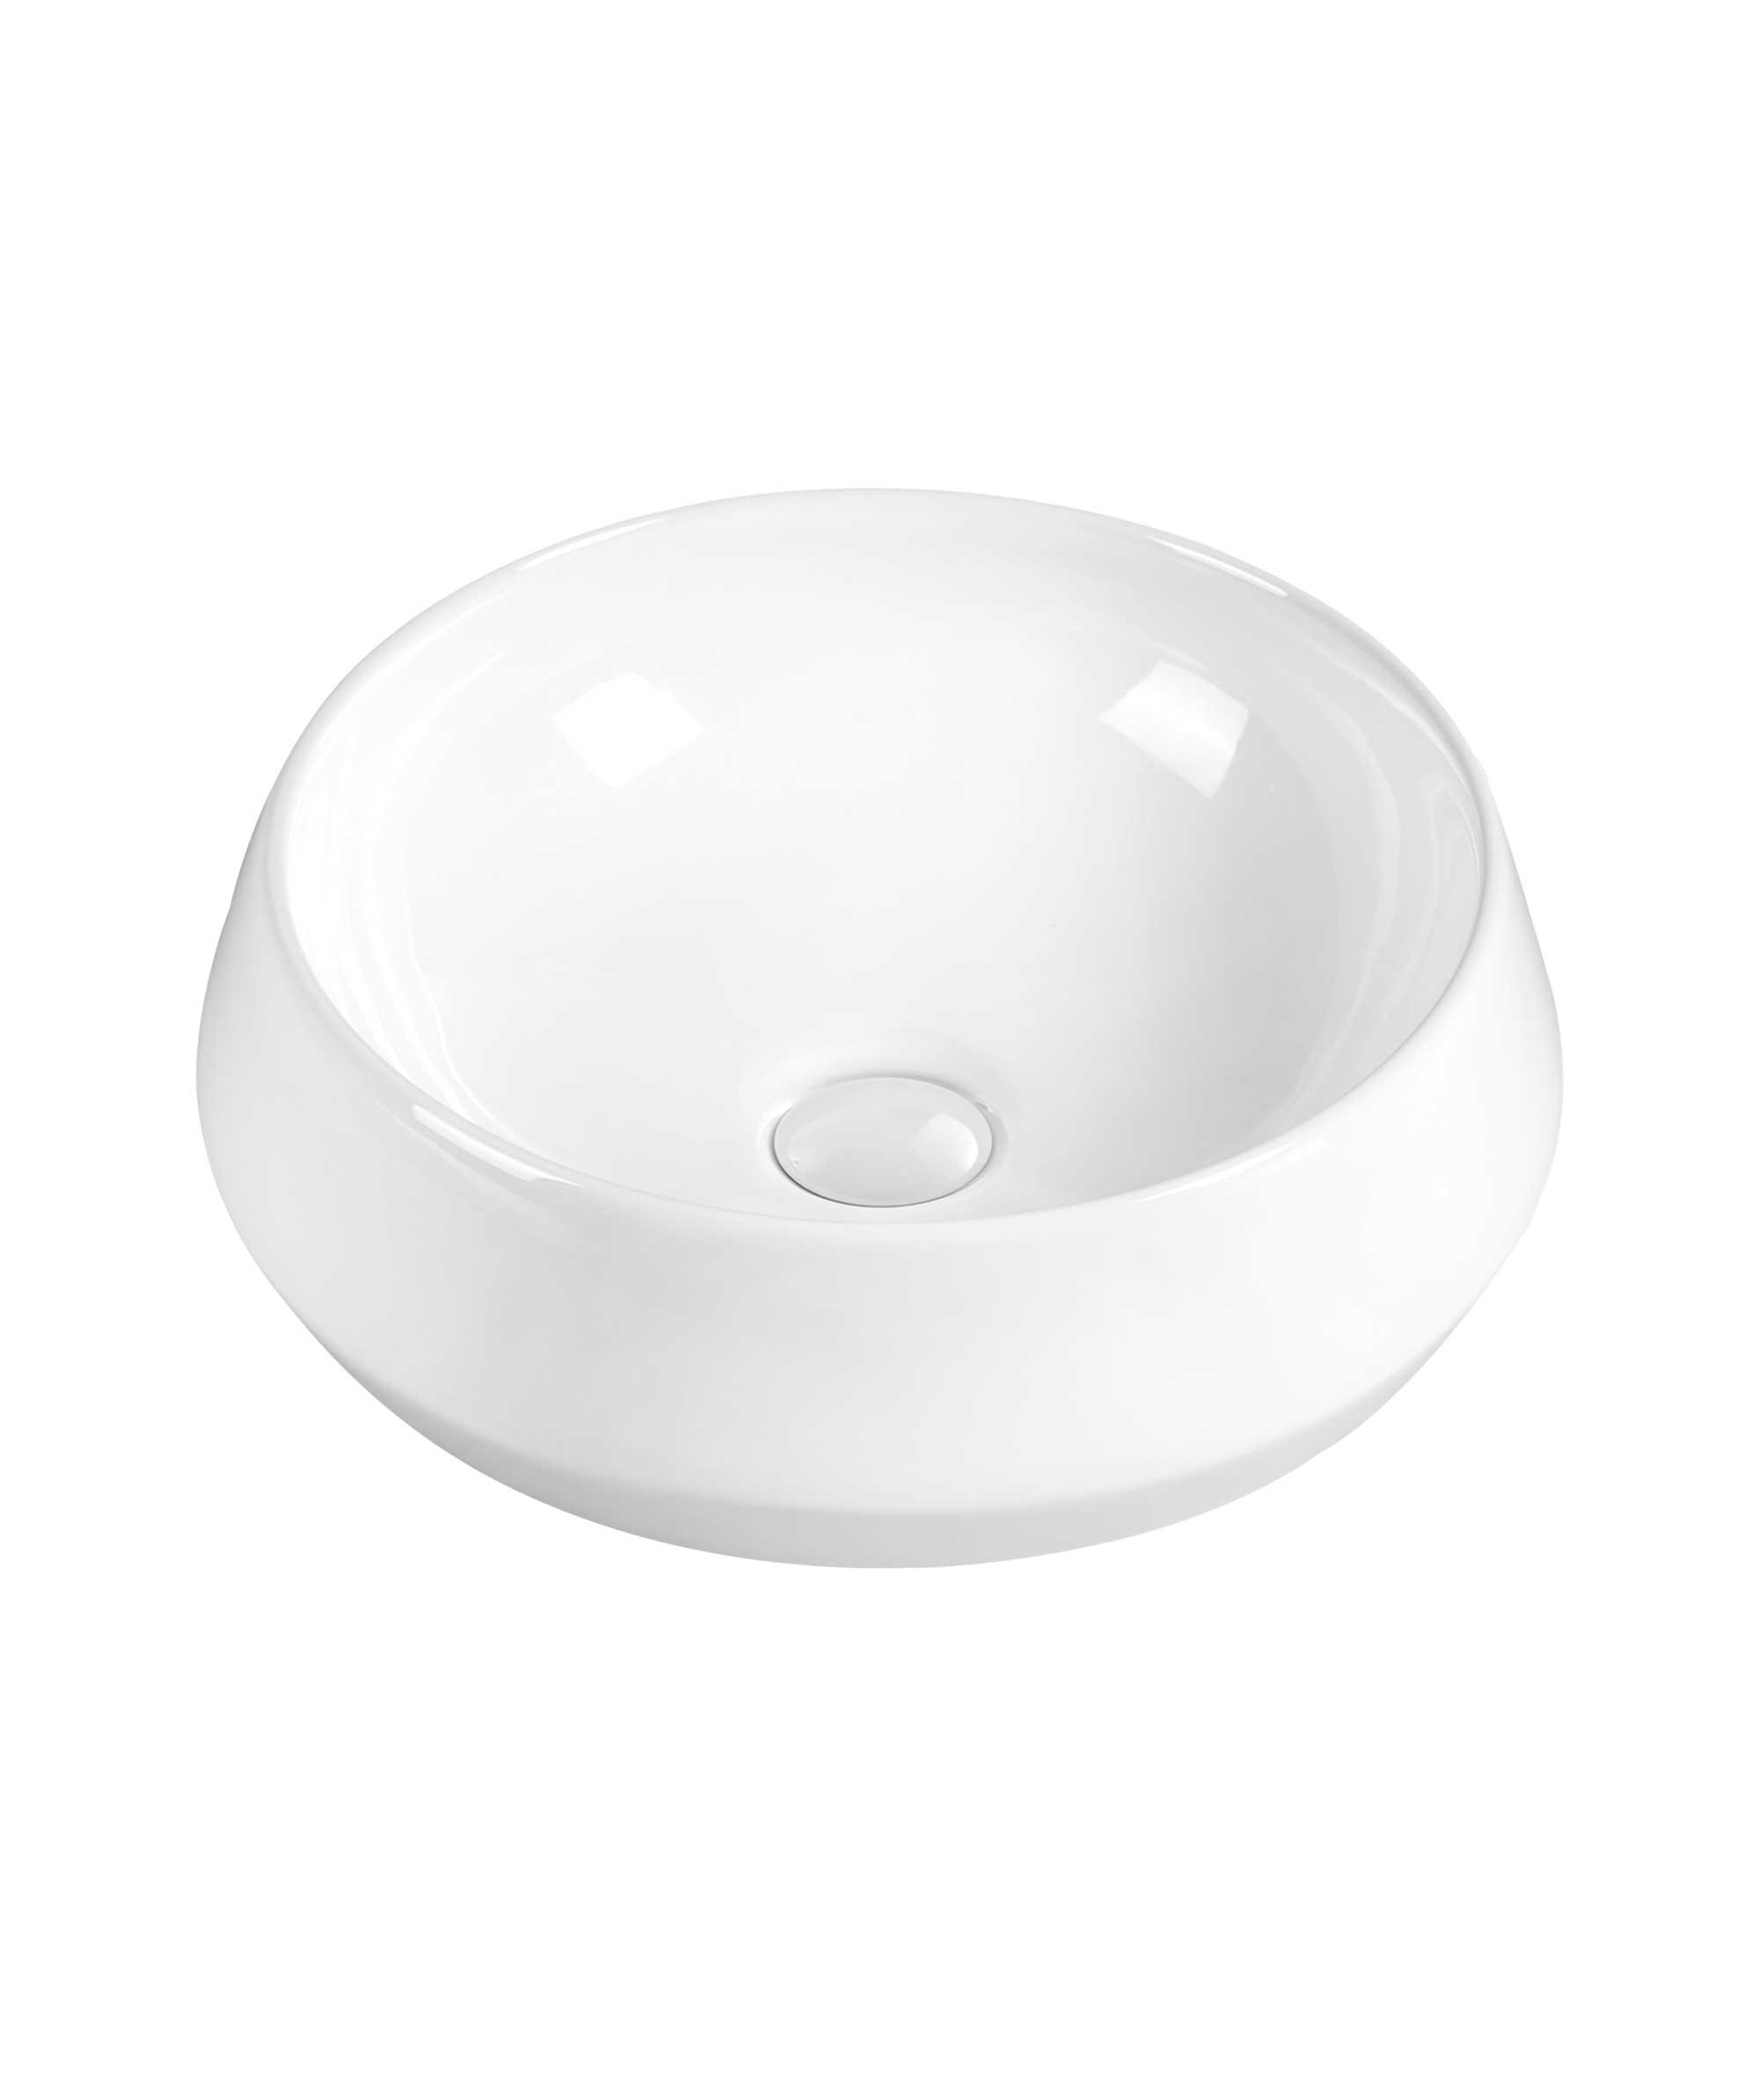 Loni 375 ceramic basin - White Gloss